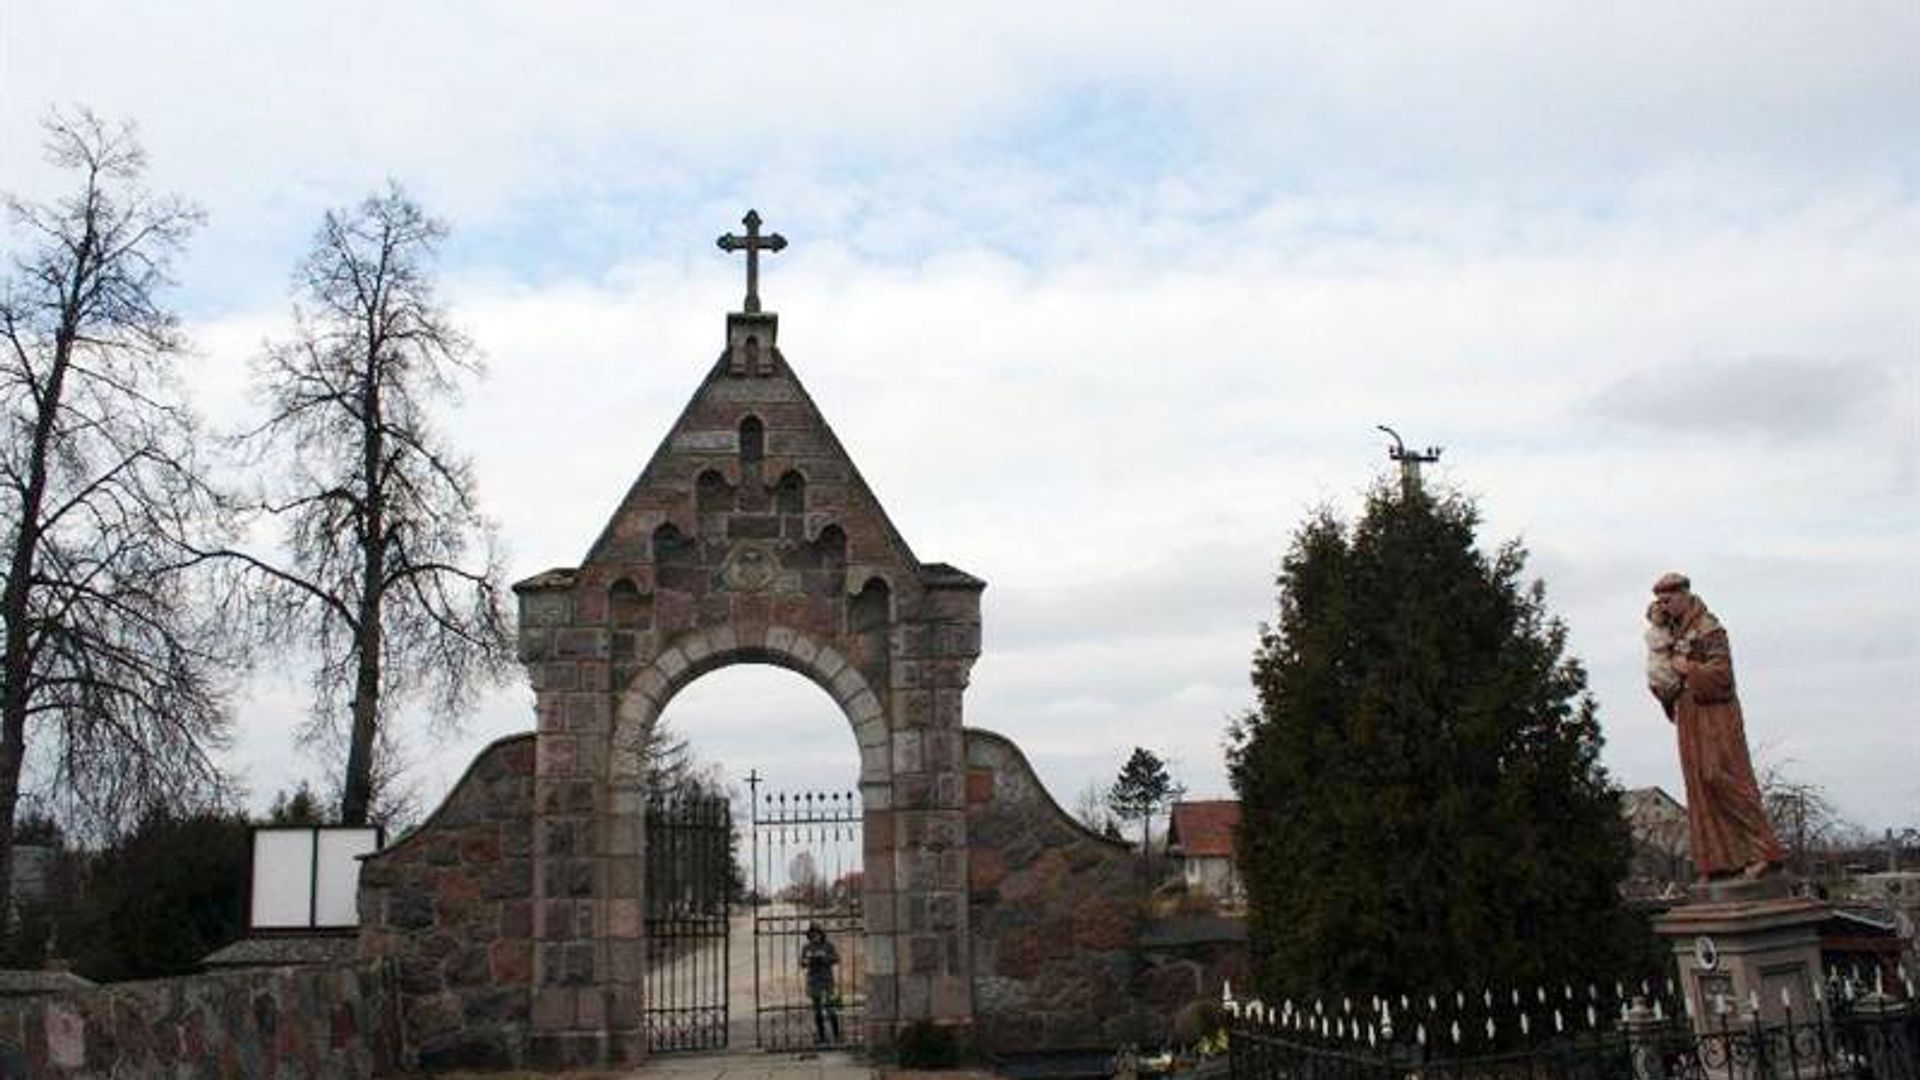 Vilkėnas Cemetery Chapel